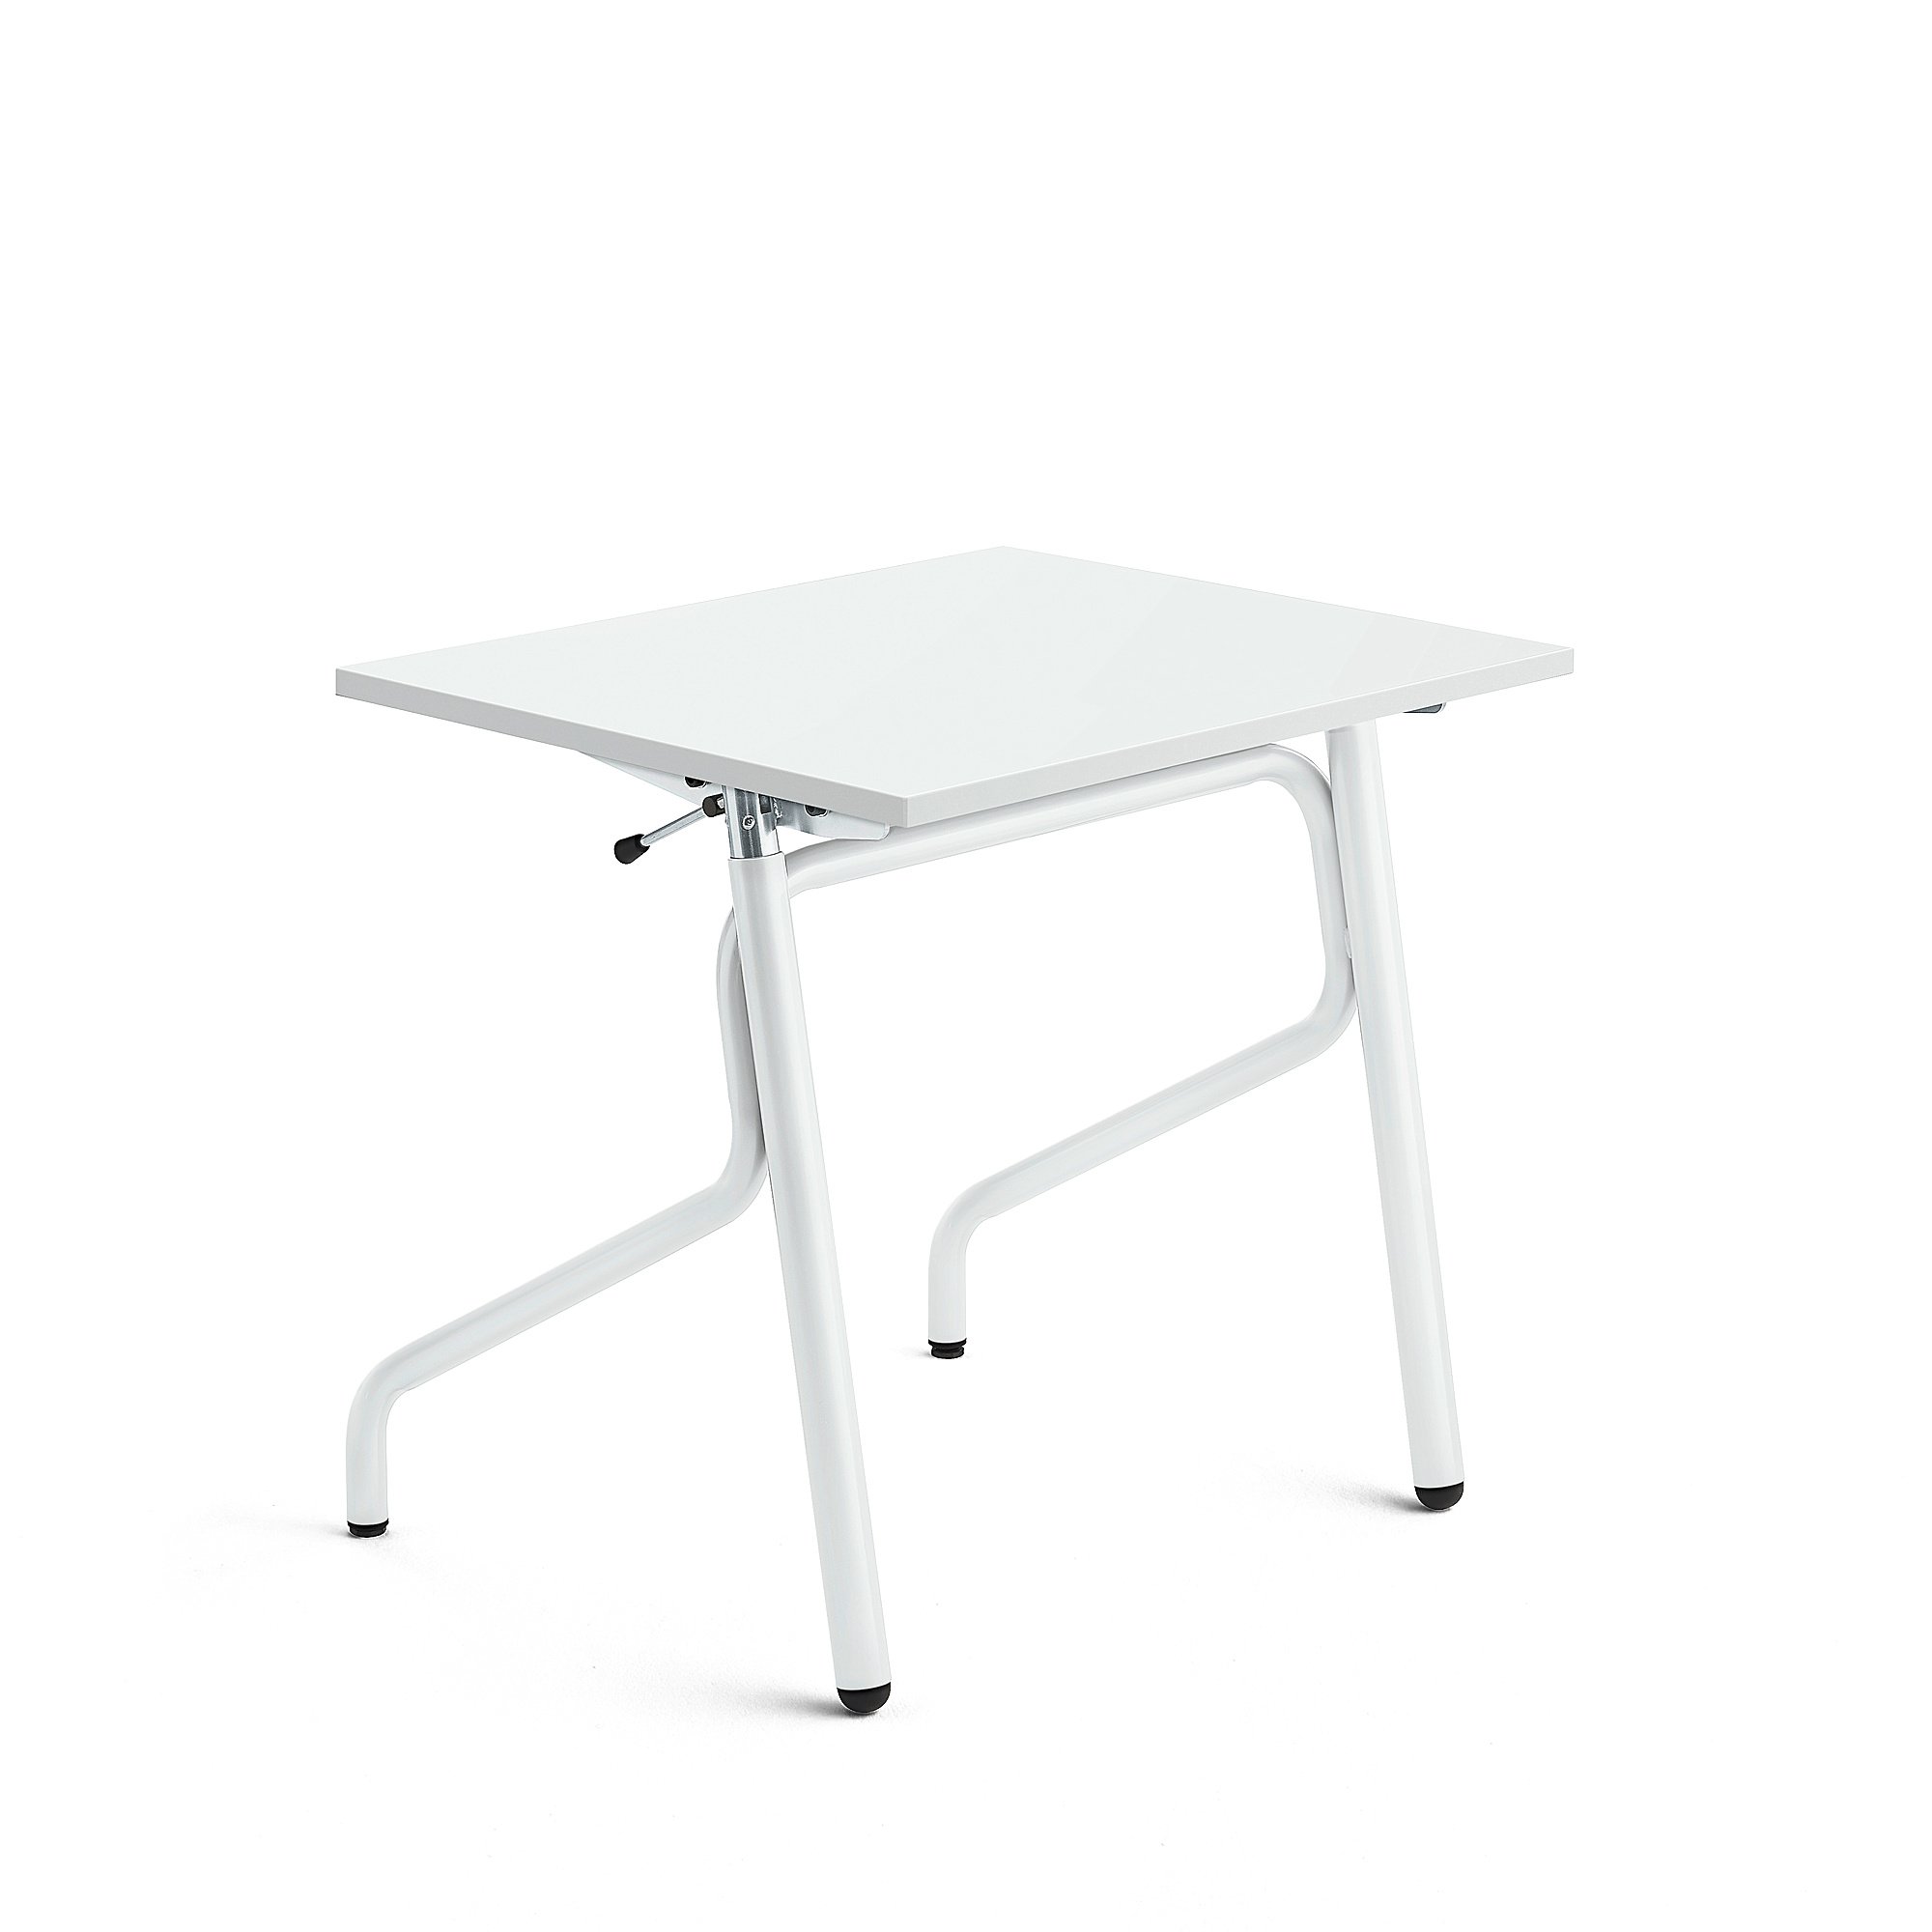 E-shop Nastaviteľná školská lavica ADJUST, 700x600 mm, HPL - biela, biela